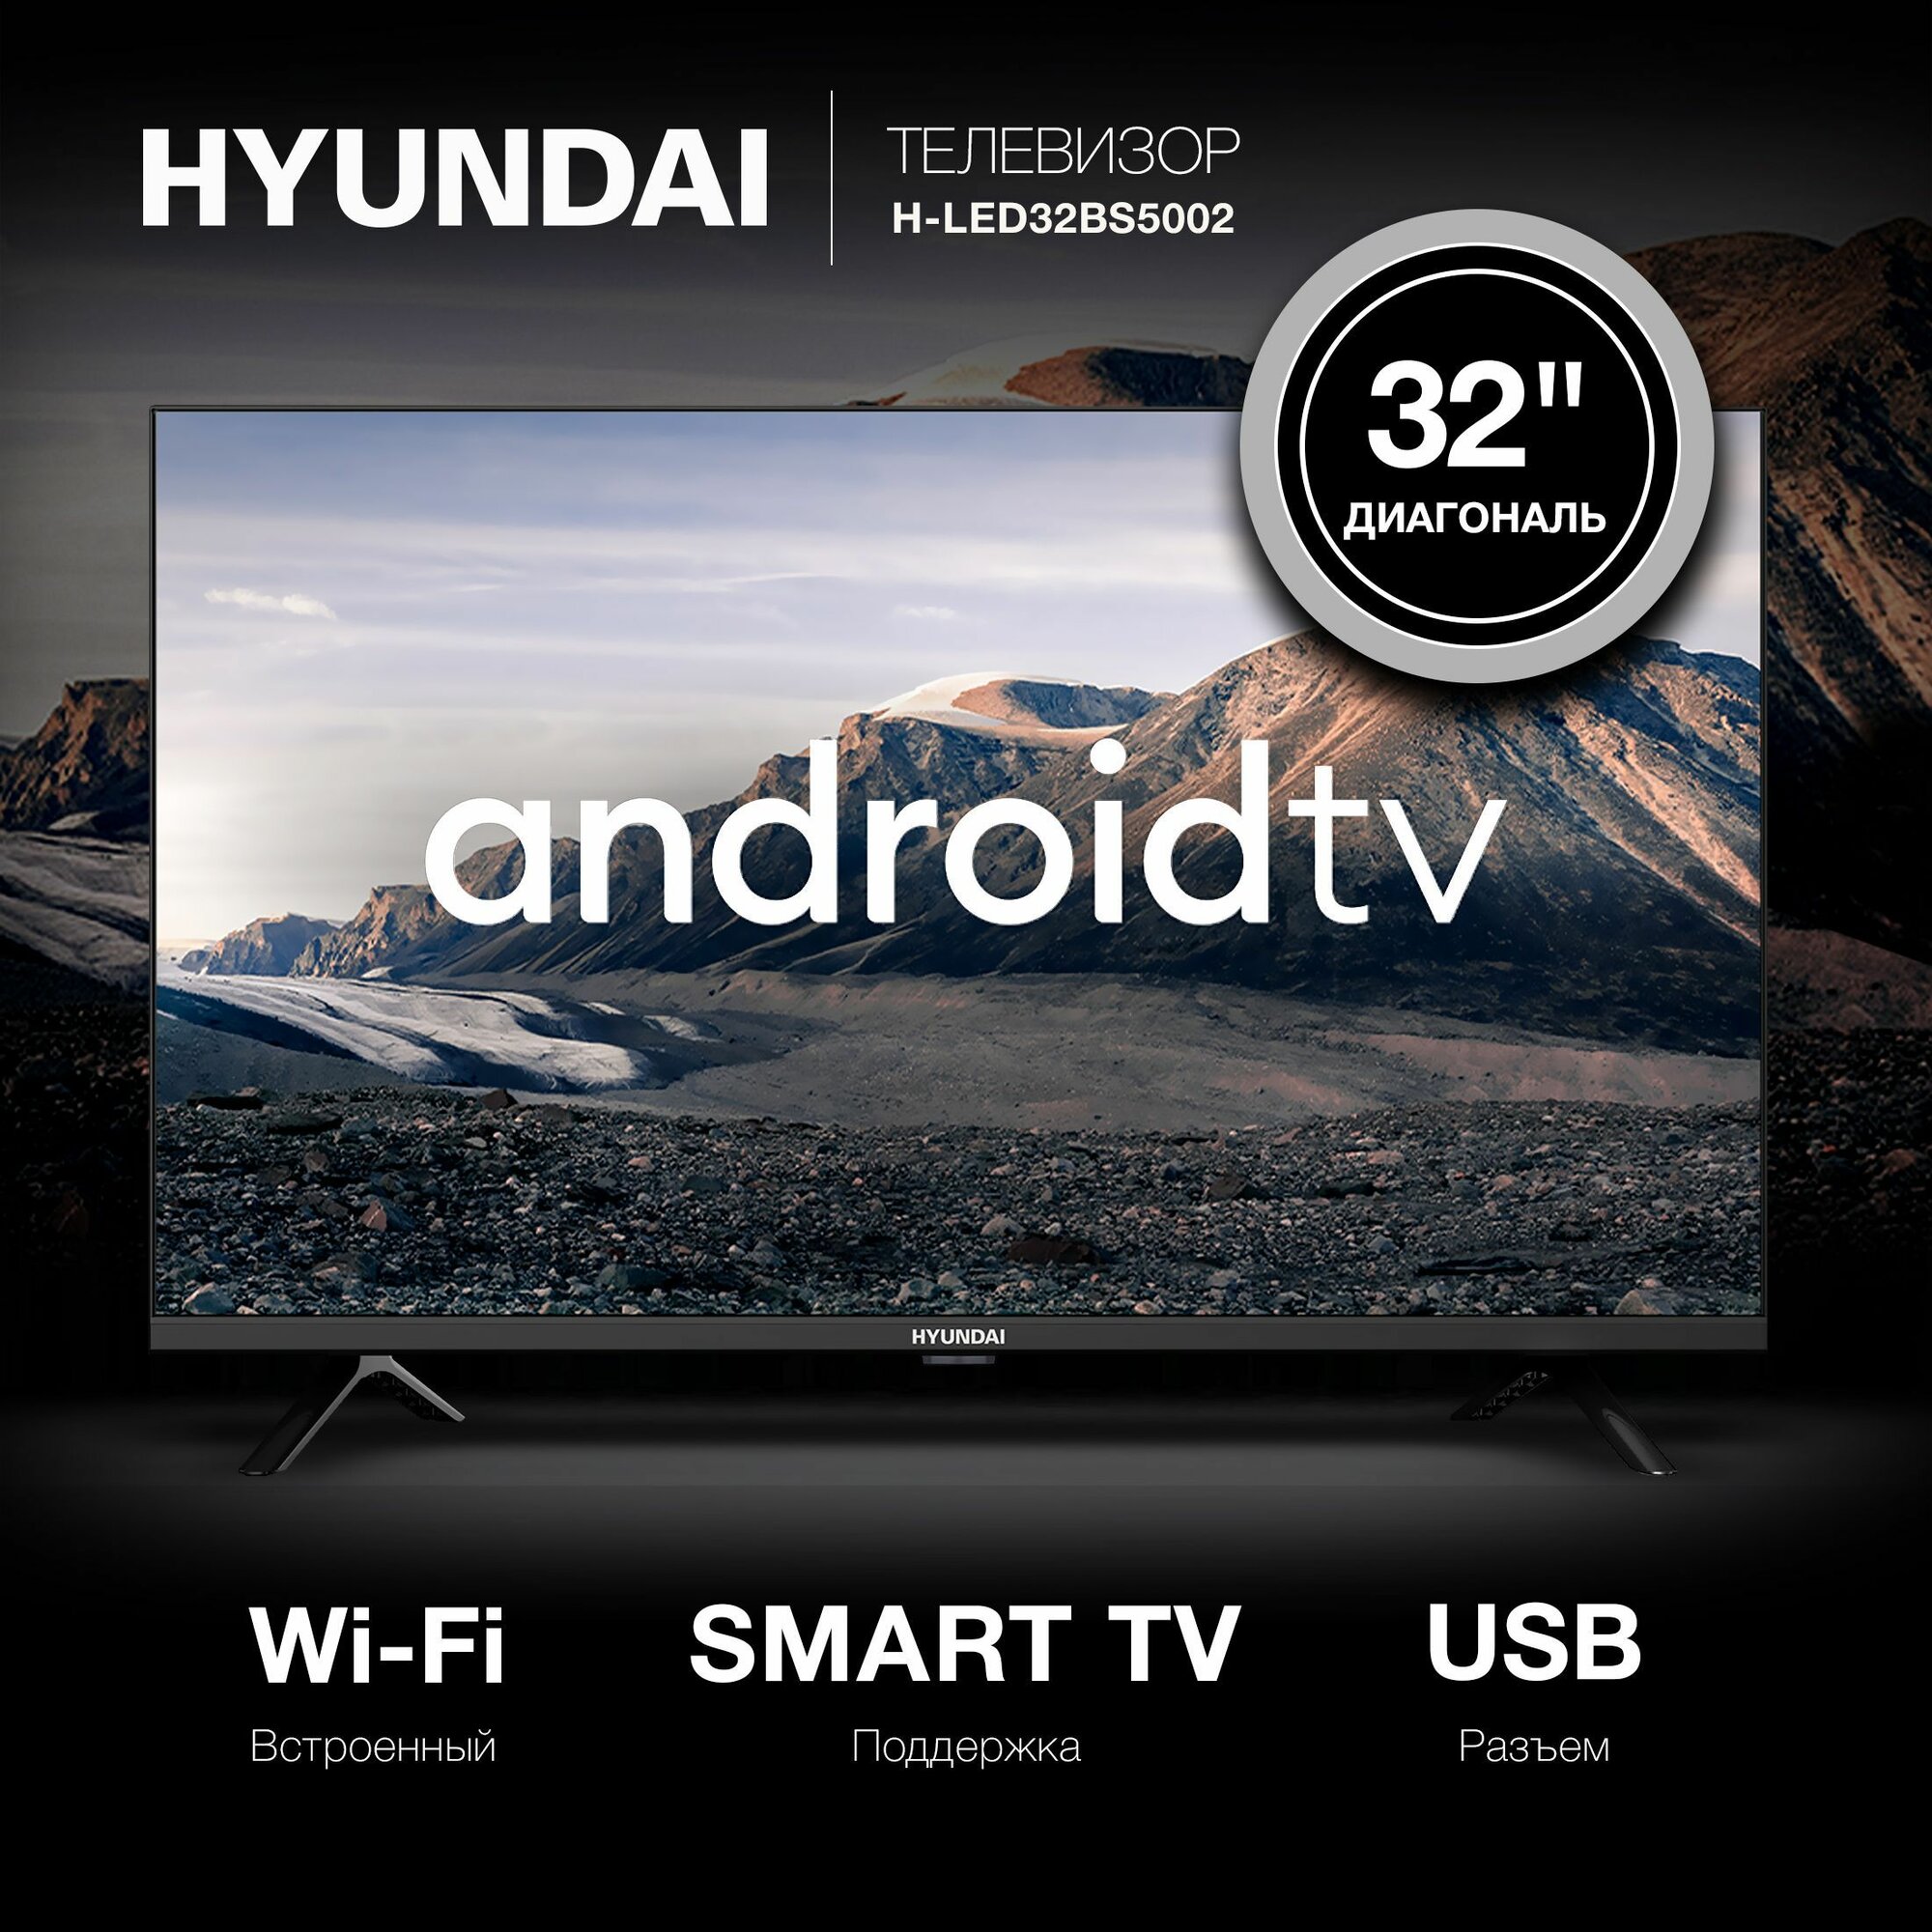 Телевизор LED HYUNDAI H-LED32BS5002 HD Smart (Android)